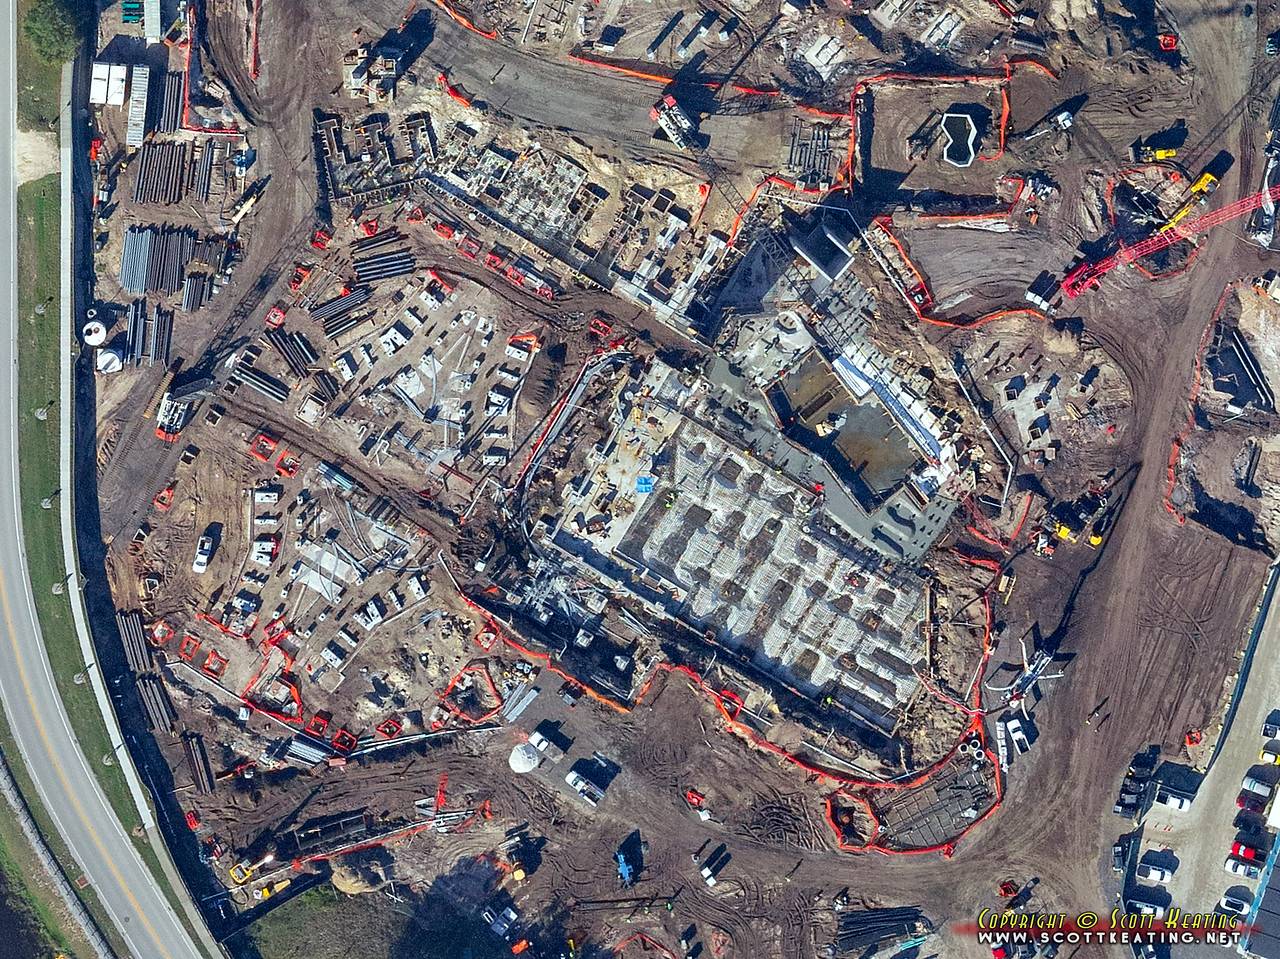 PHOTOS - Aerial views of the AVATAR land construction at Disney's Animal Kingdom